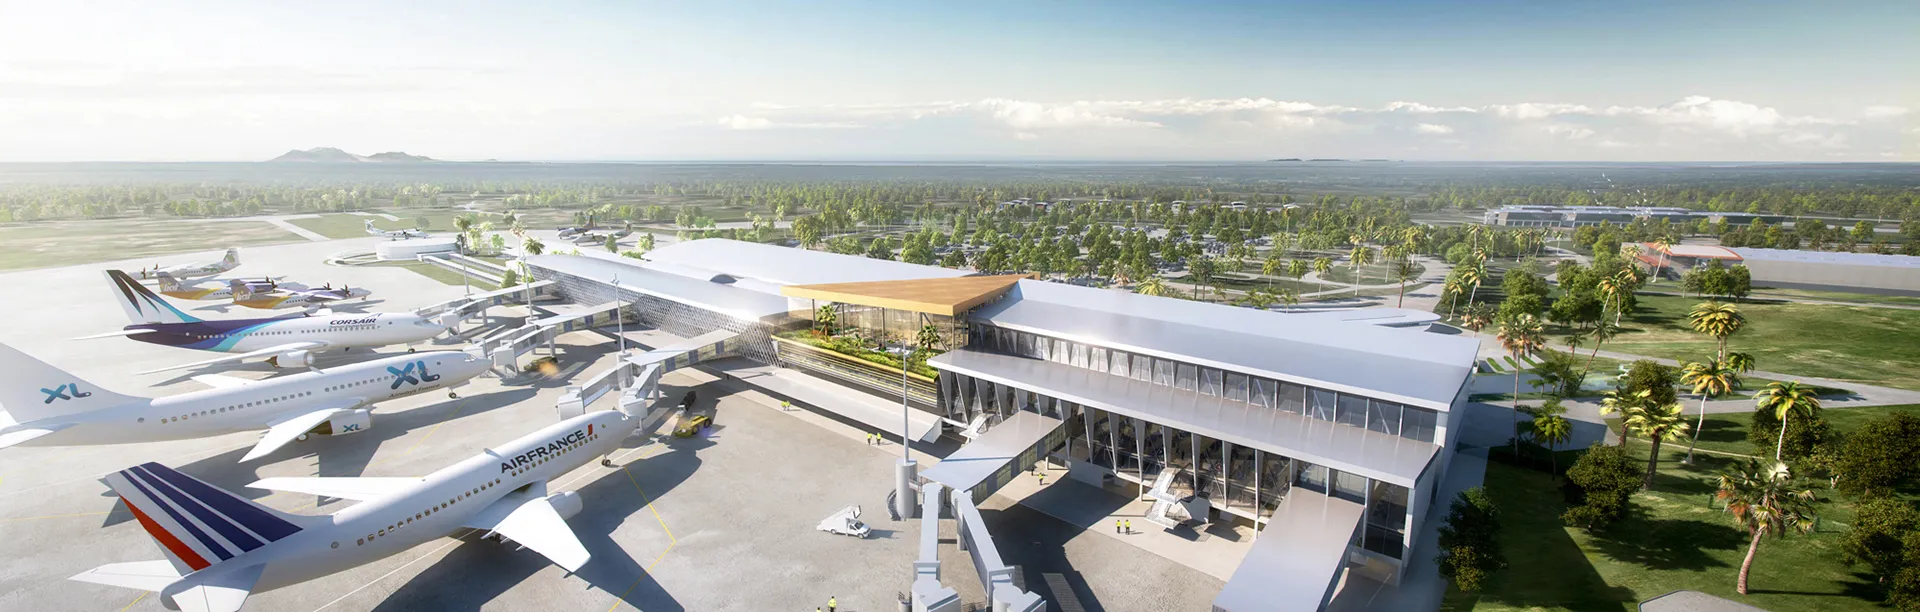 3D Exterior Rendering Airport Rendering